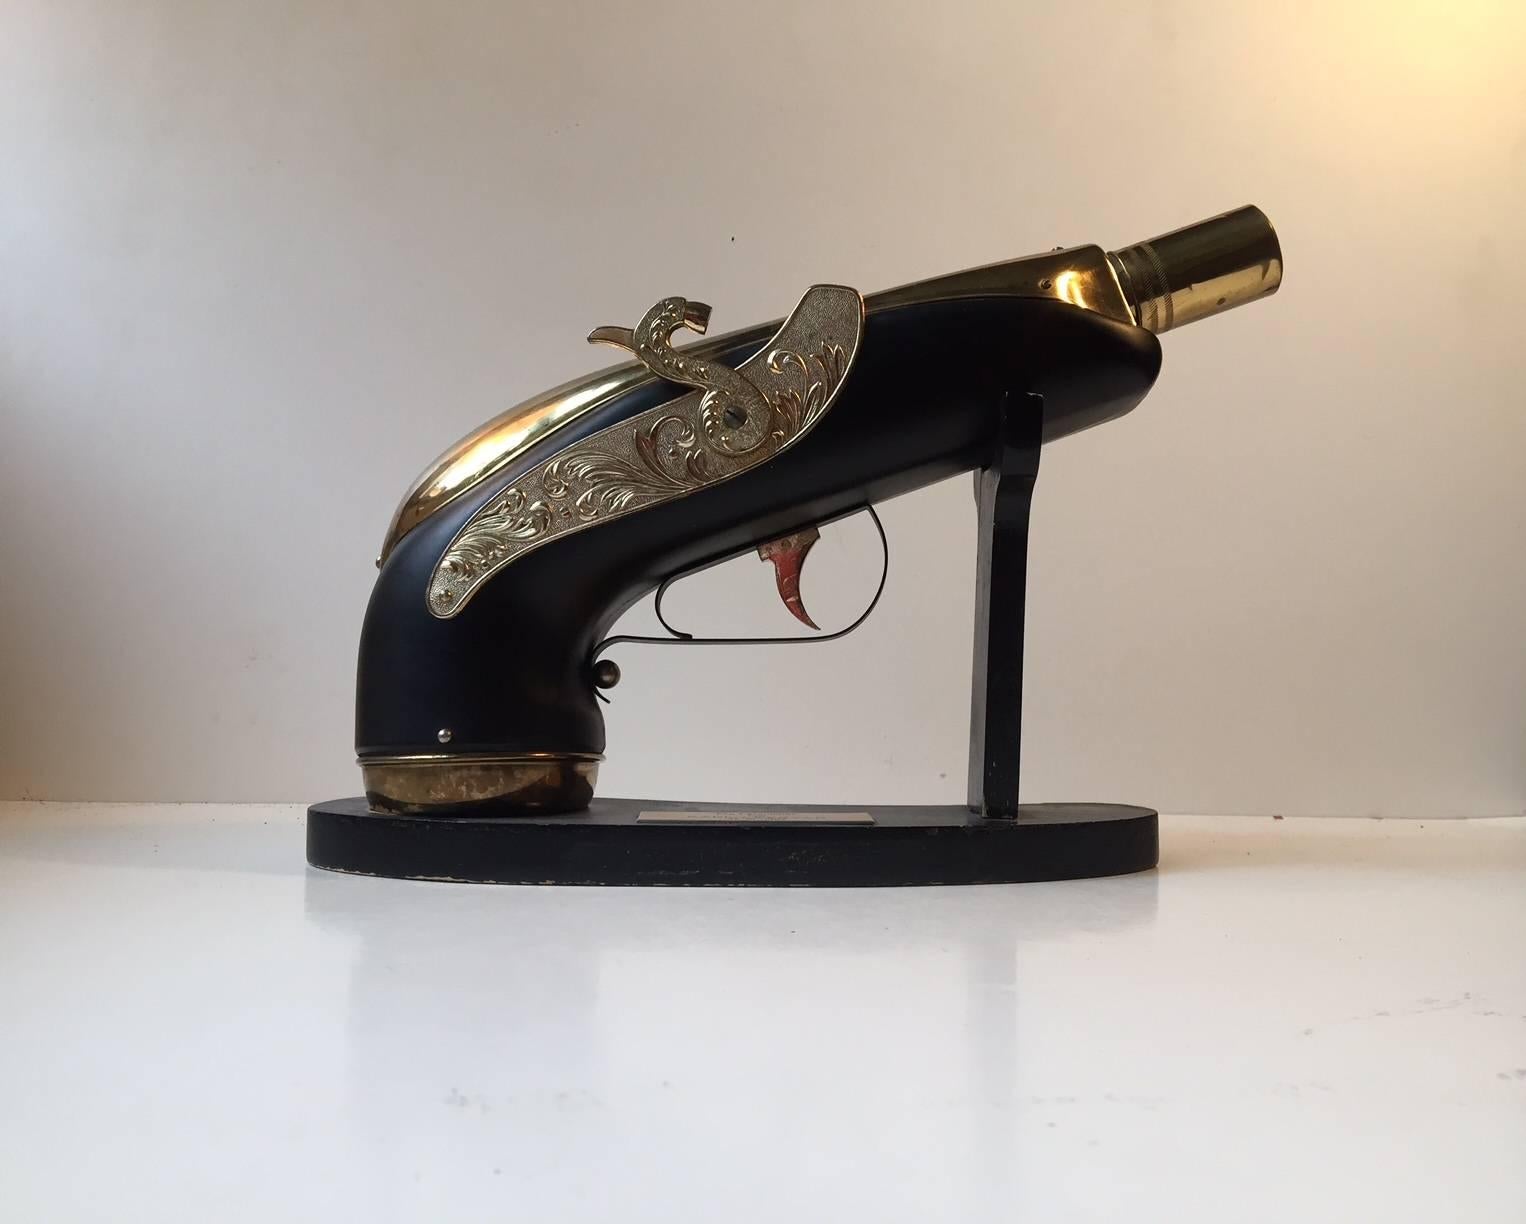 Japanese Vintage Musical Gun Decanter, Japan, 1960s